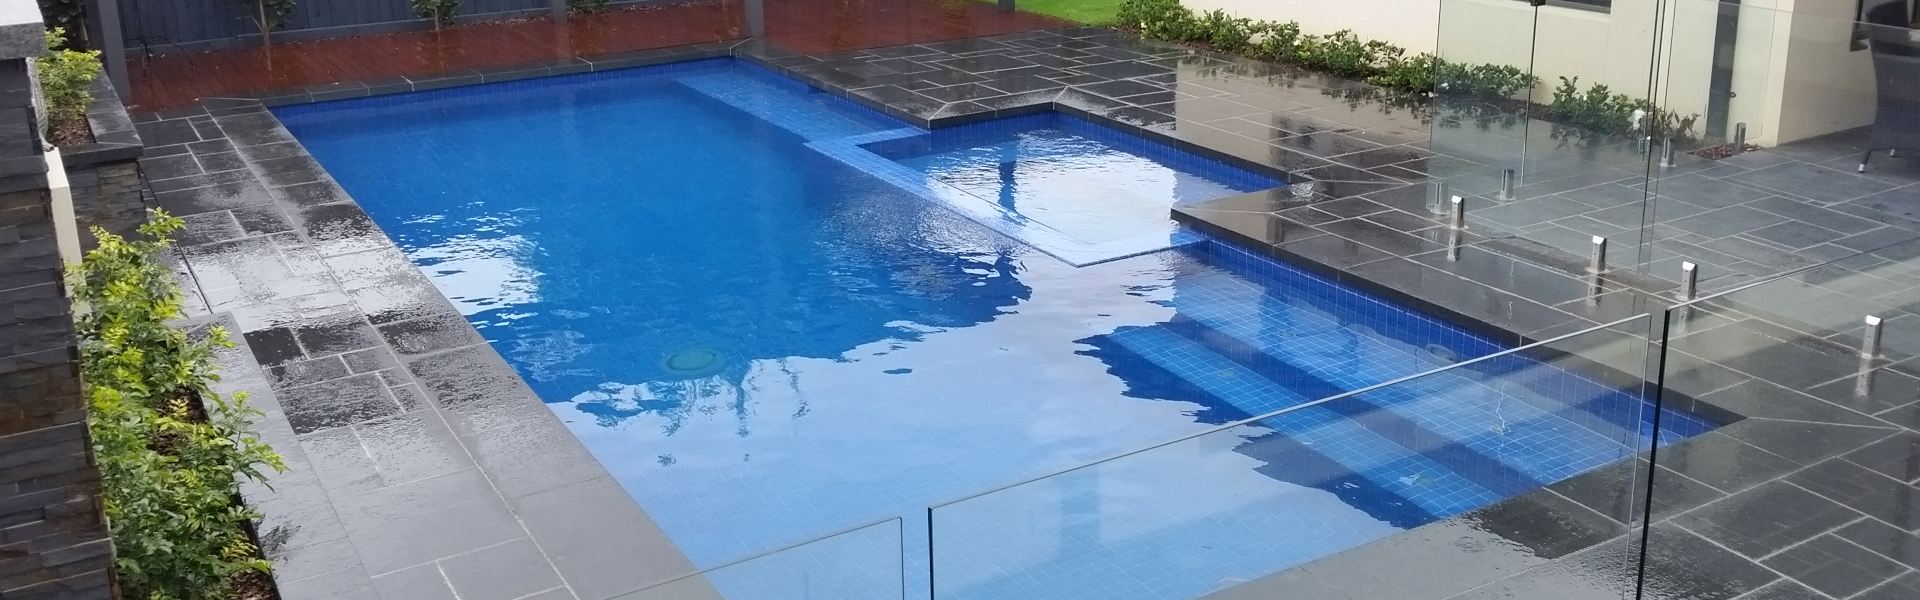 access pools swimming pools